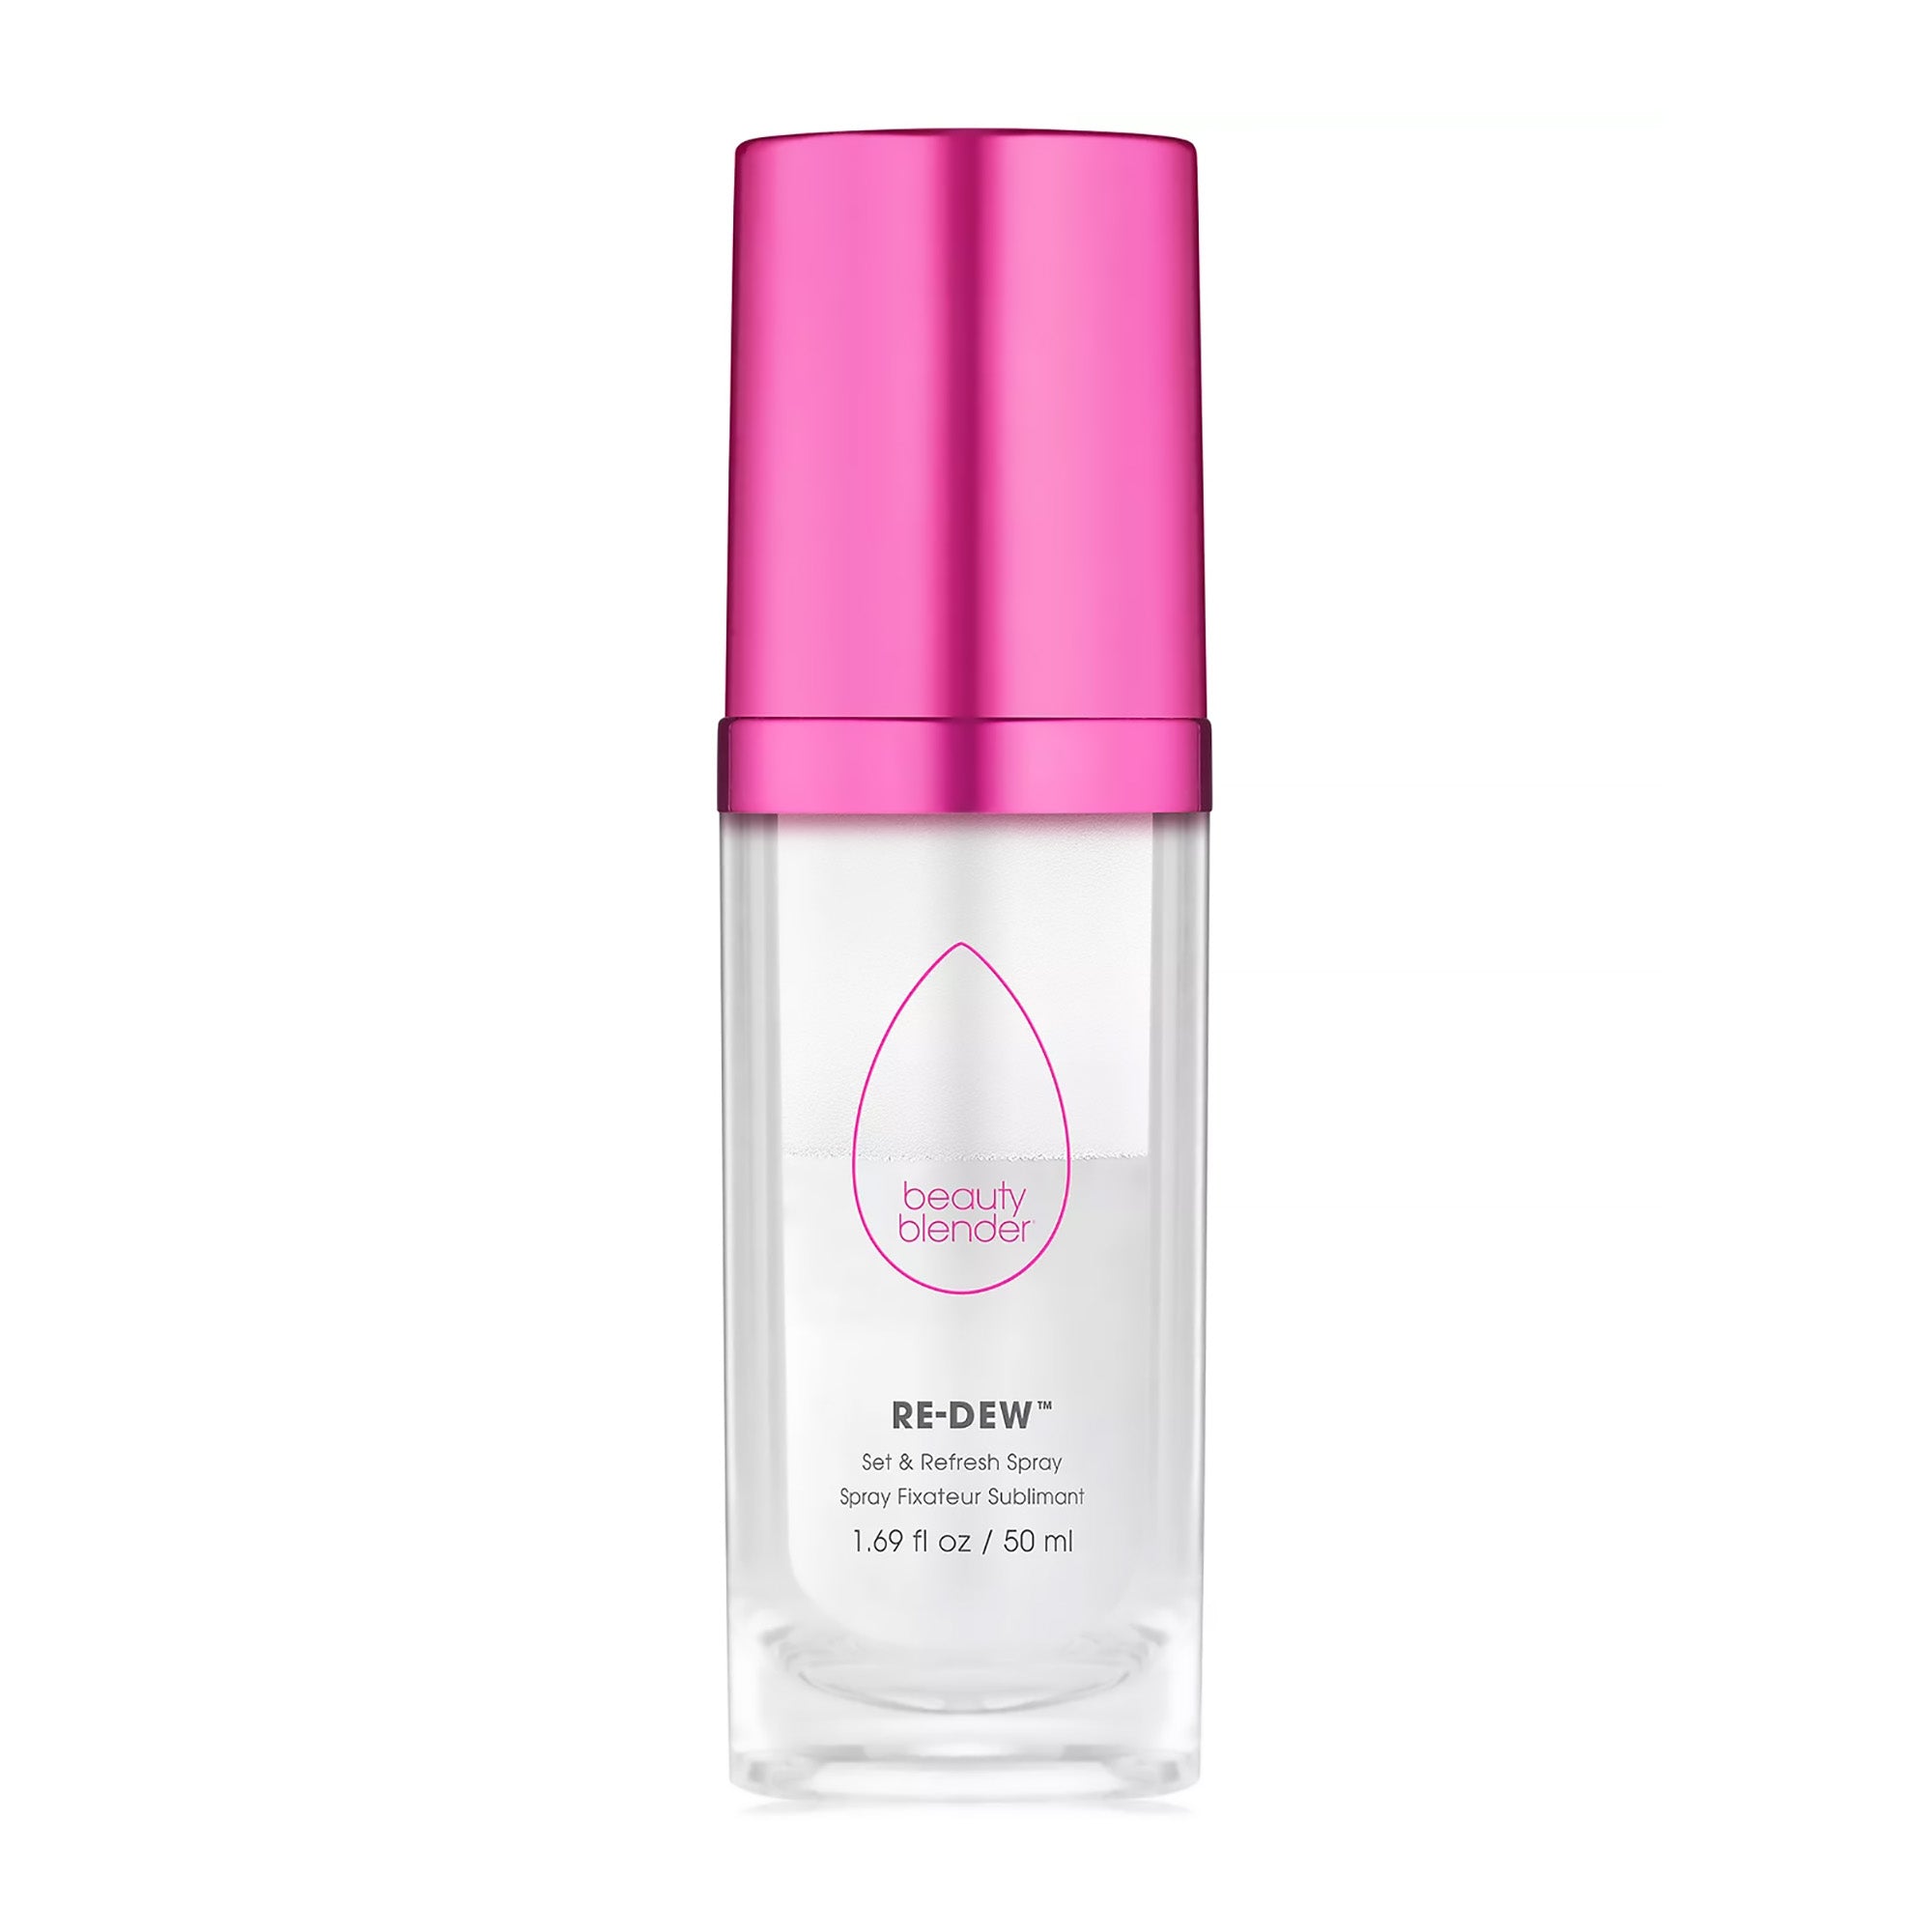 beautyblender Re-Dew Set & Refresh Spray / 1.69OZ